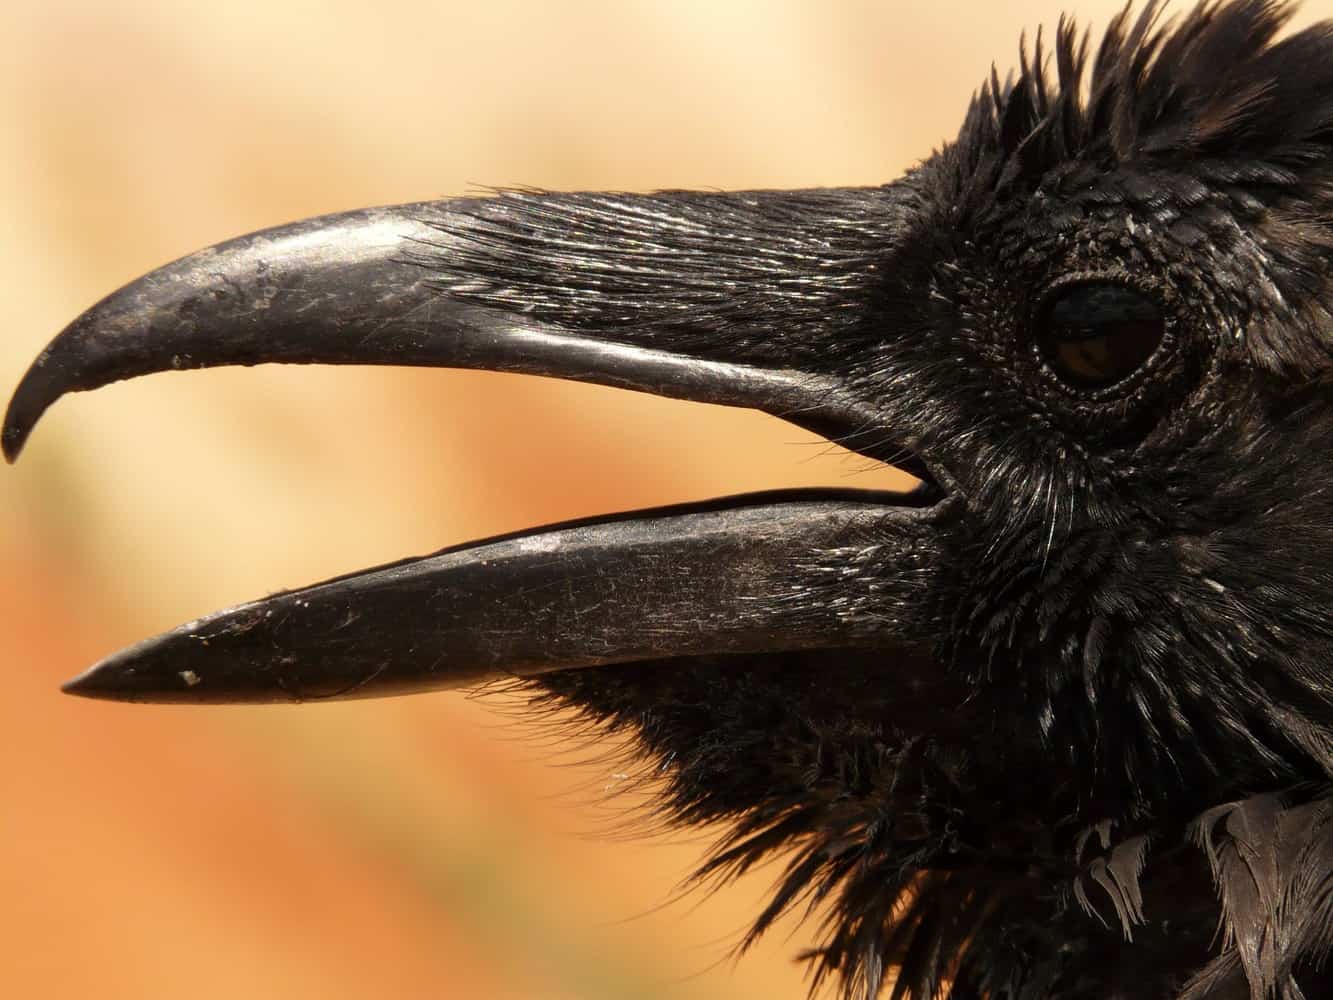 A black crow